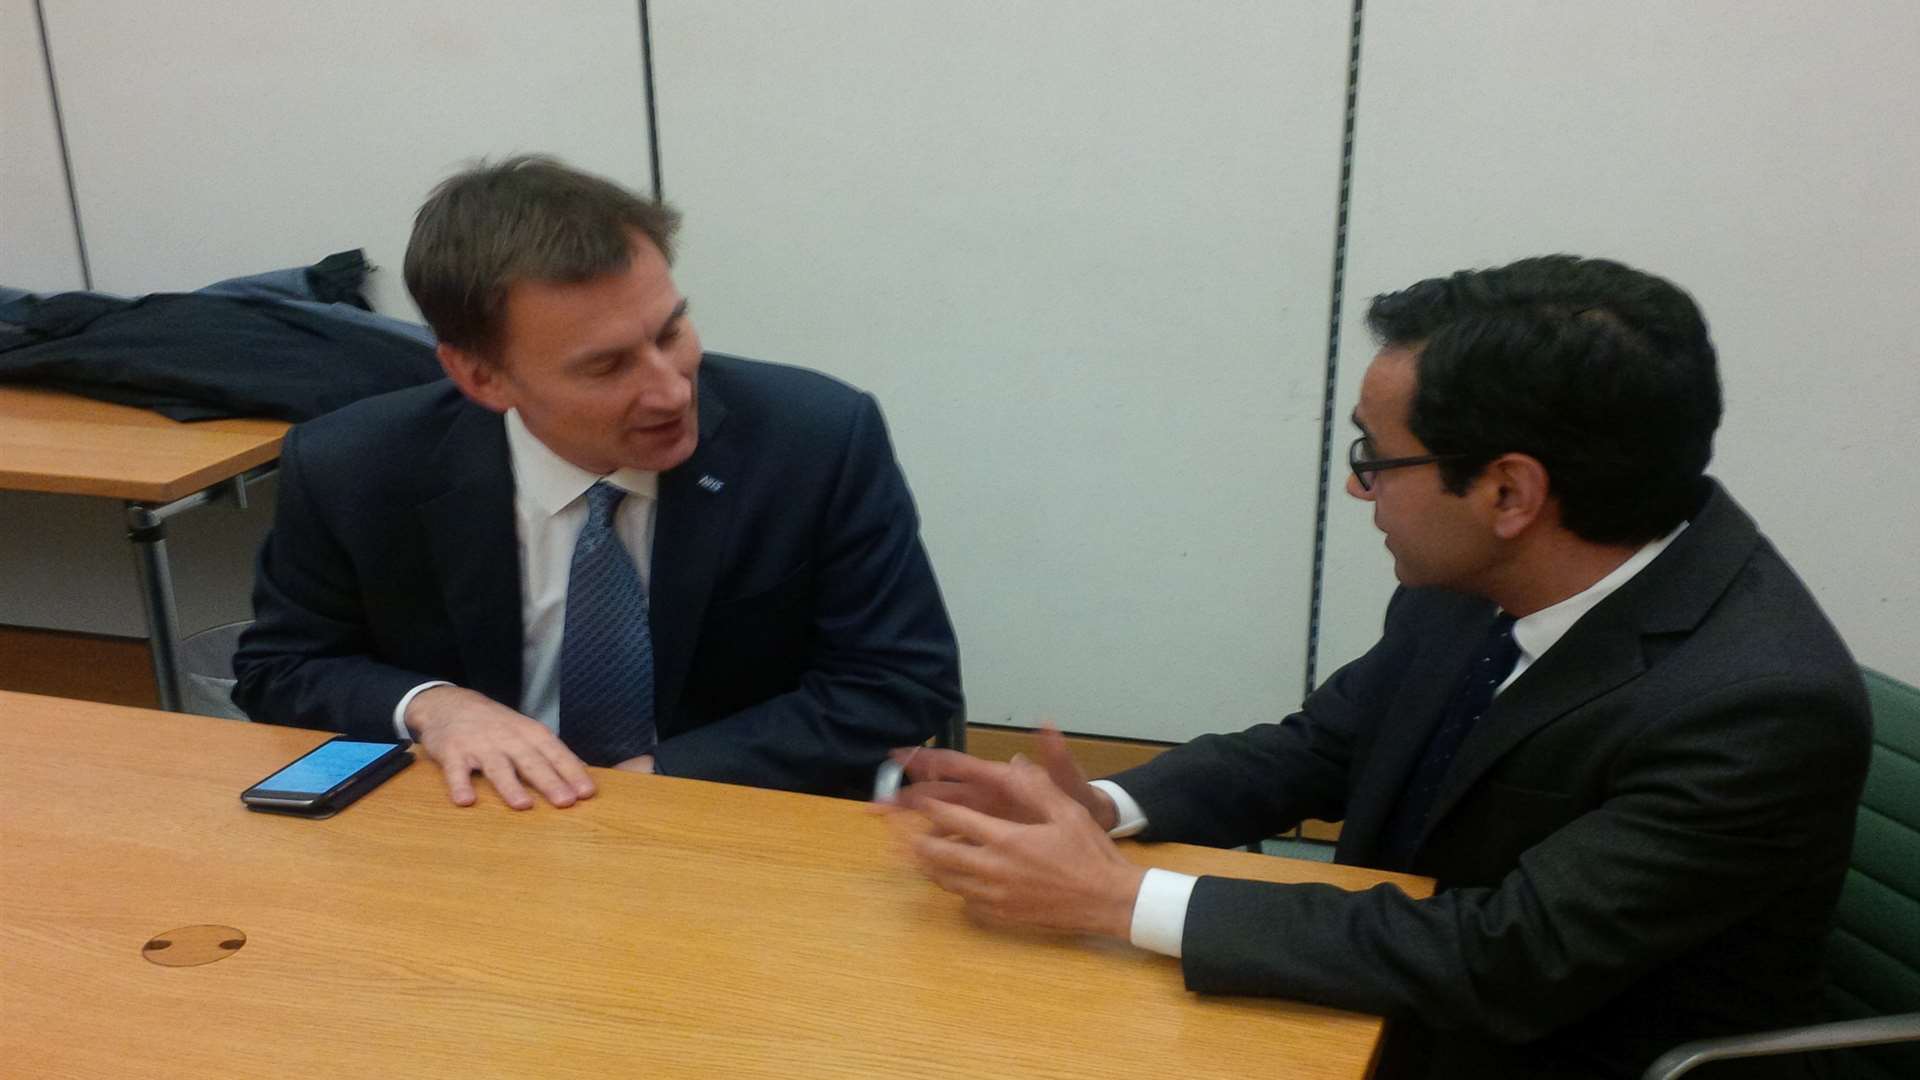 MP Rehman Chishti met with health secretary Jeremy Hunt